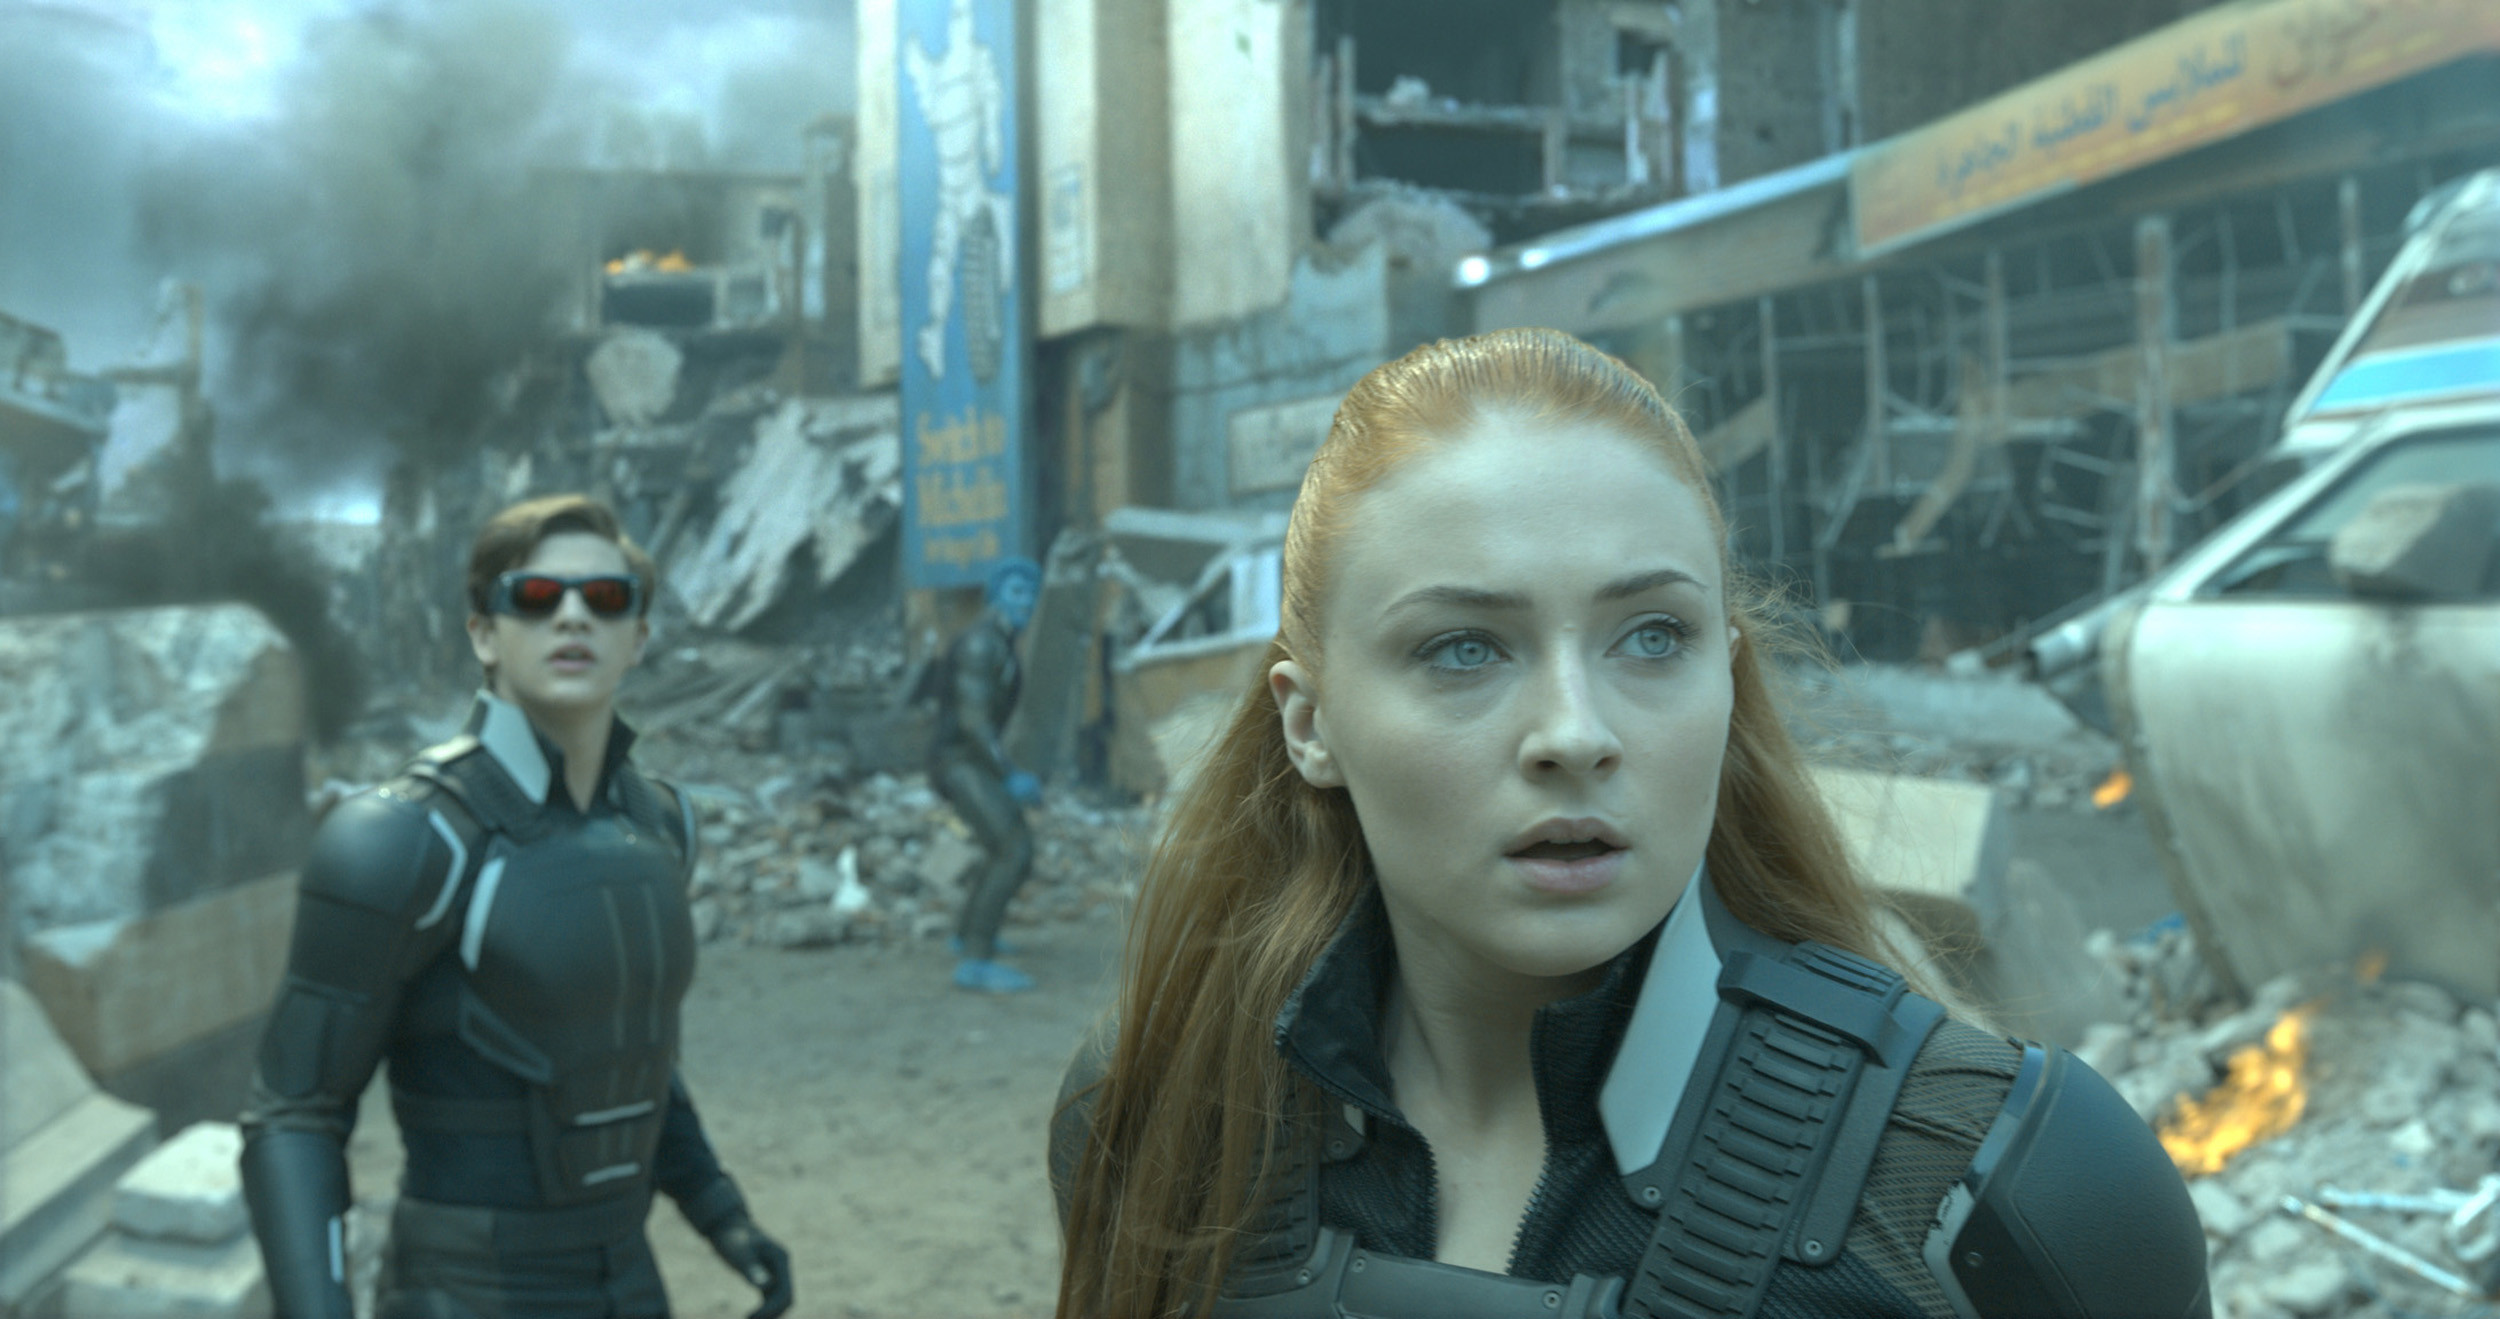 'Jean Grey' & 'Cyclops' Unite In New Photo From X-MEN: APOCALYPSE As ...